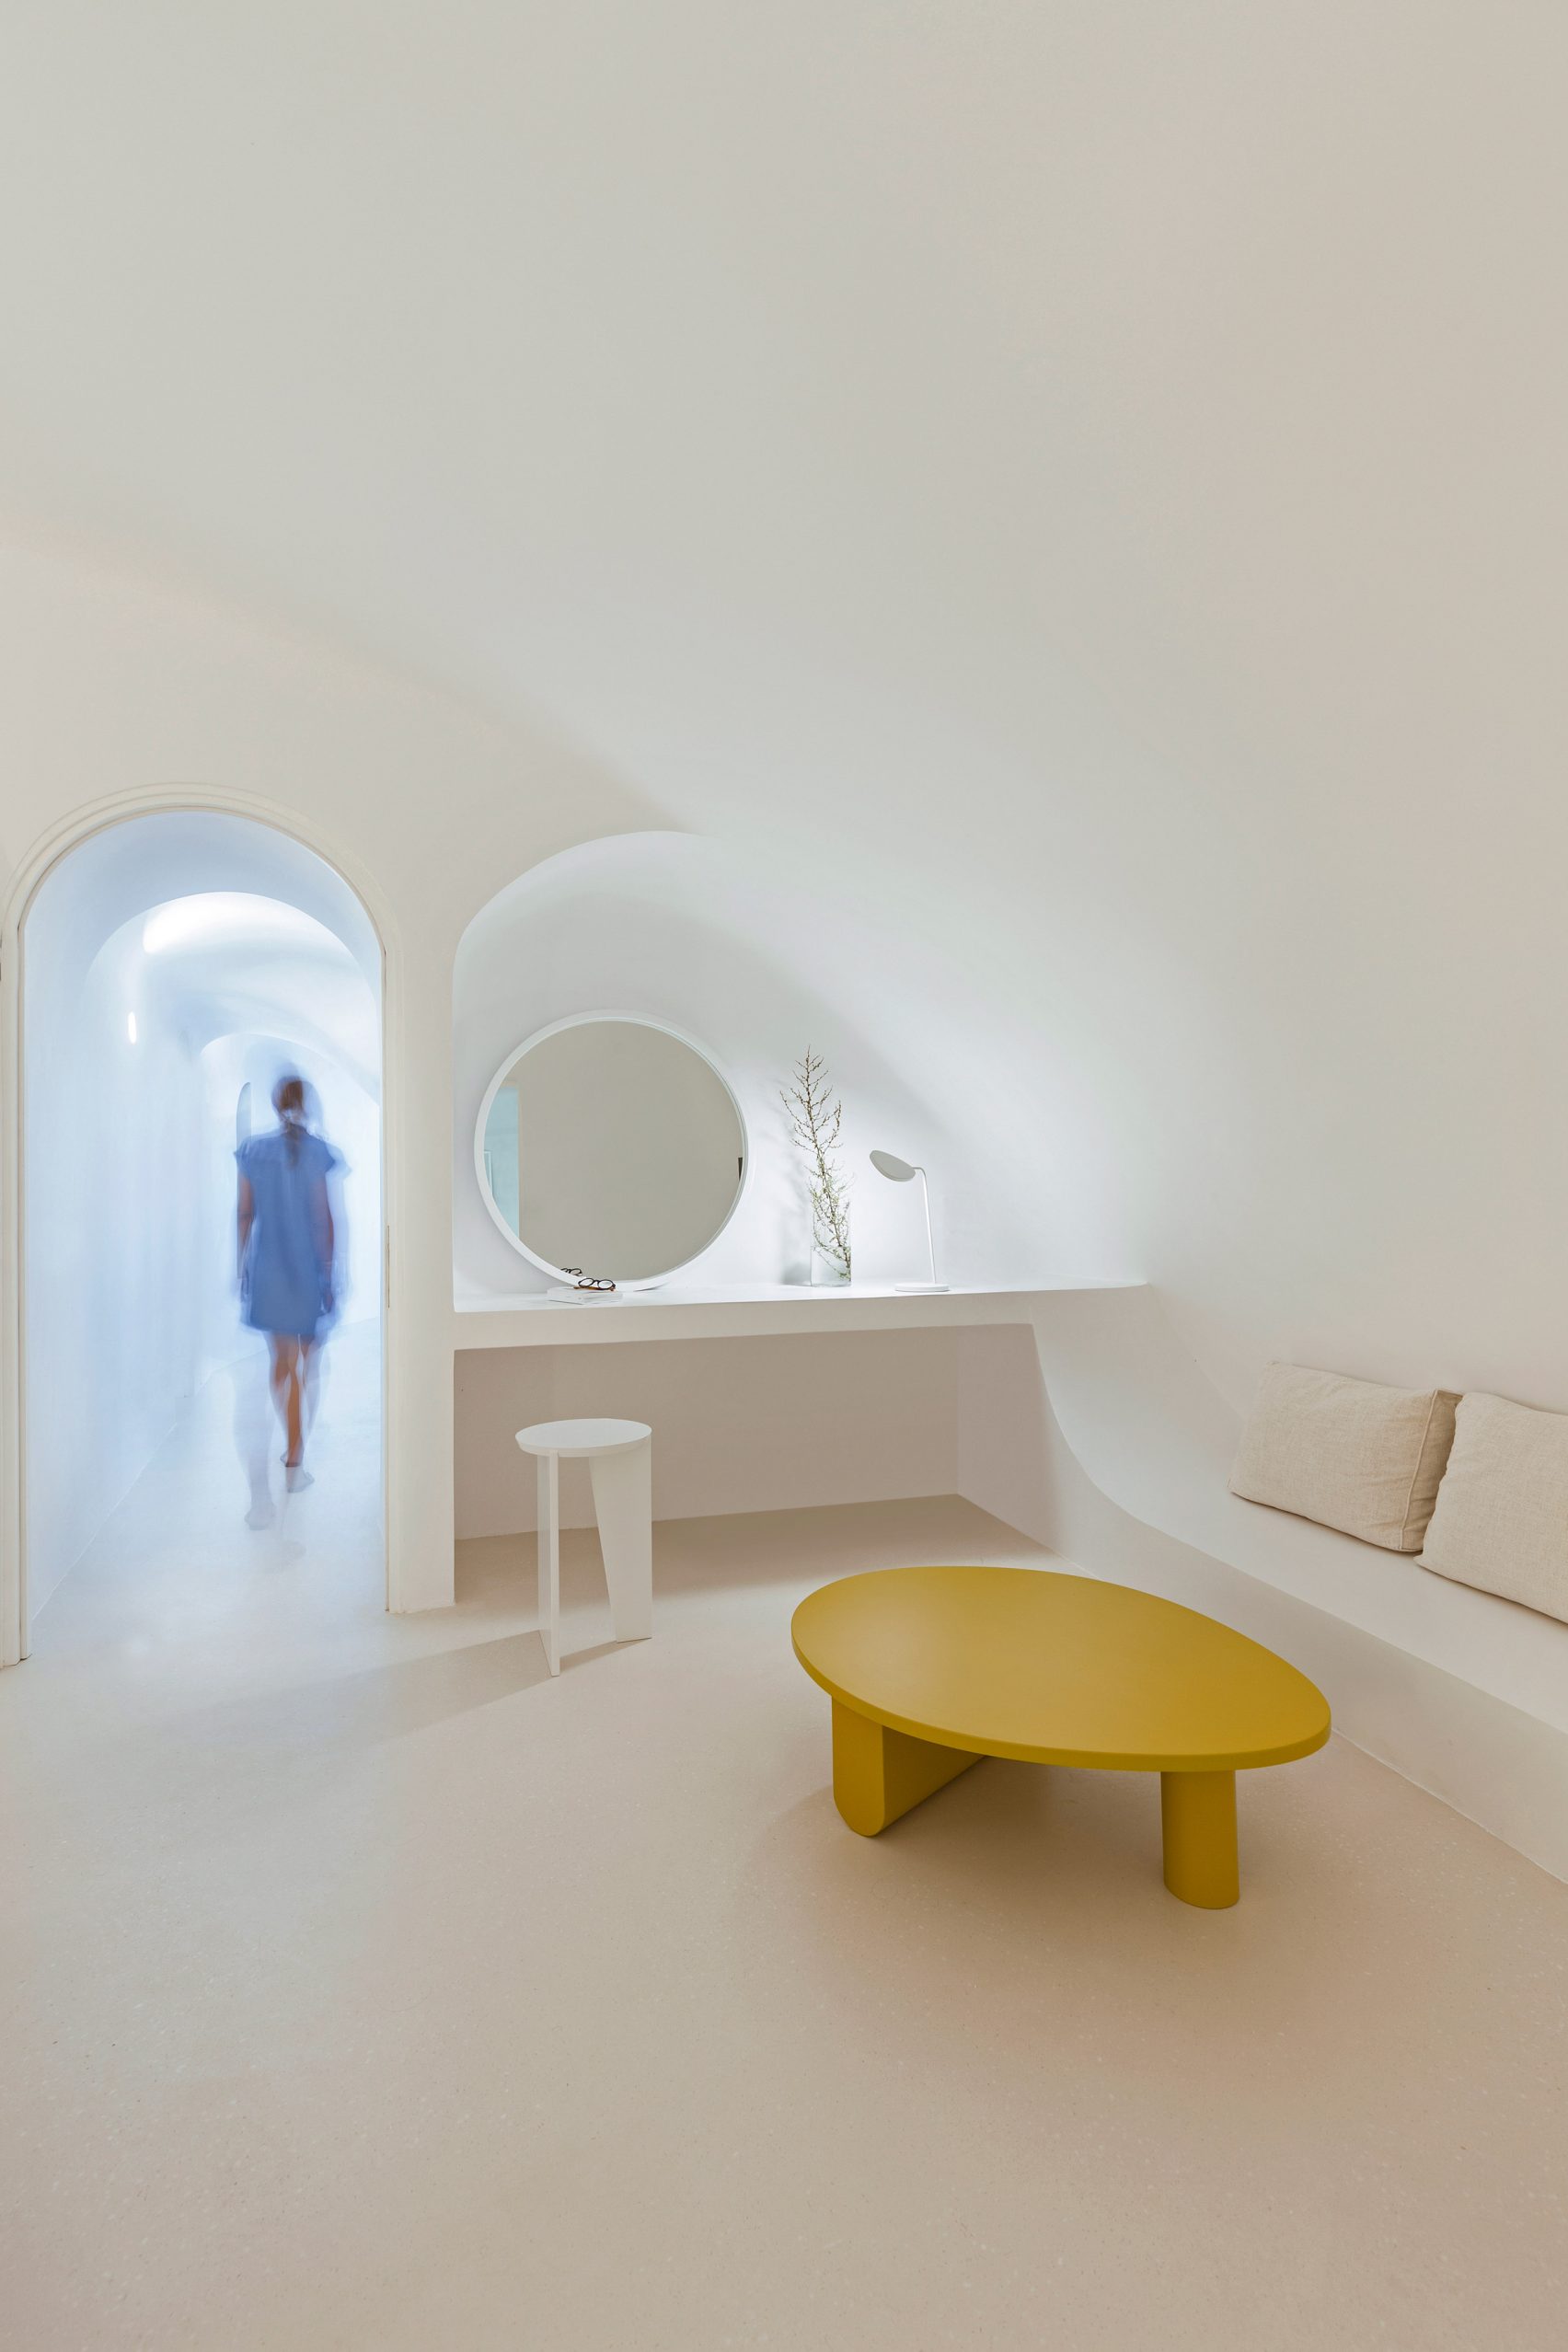 summer-residence-santorini-kapsimalis-architects-greece-architecture_dezeen_2364_col_10-1704x2556